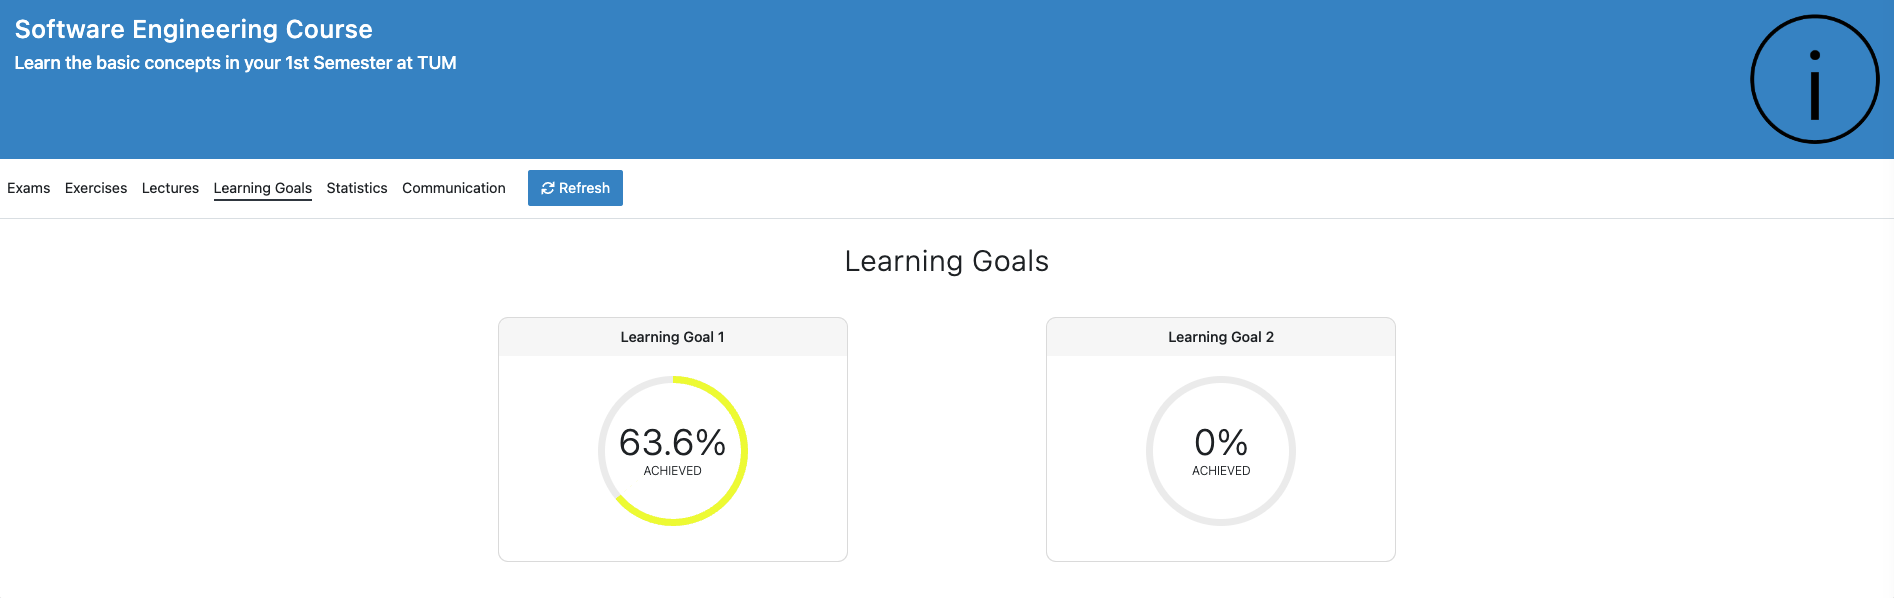 students-learning-goals-statistics